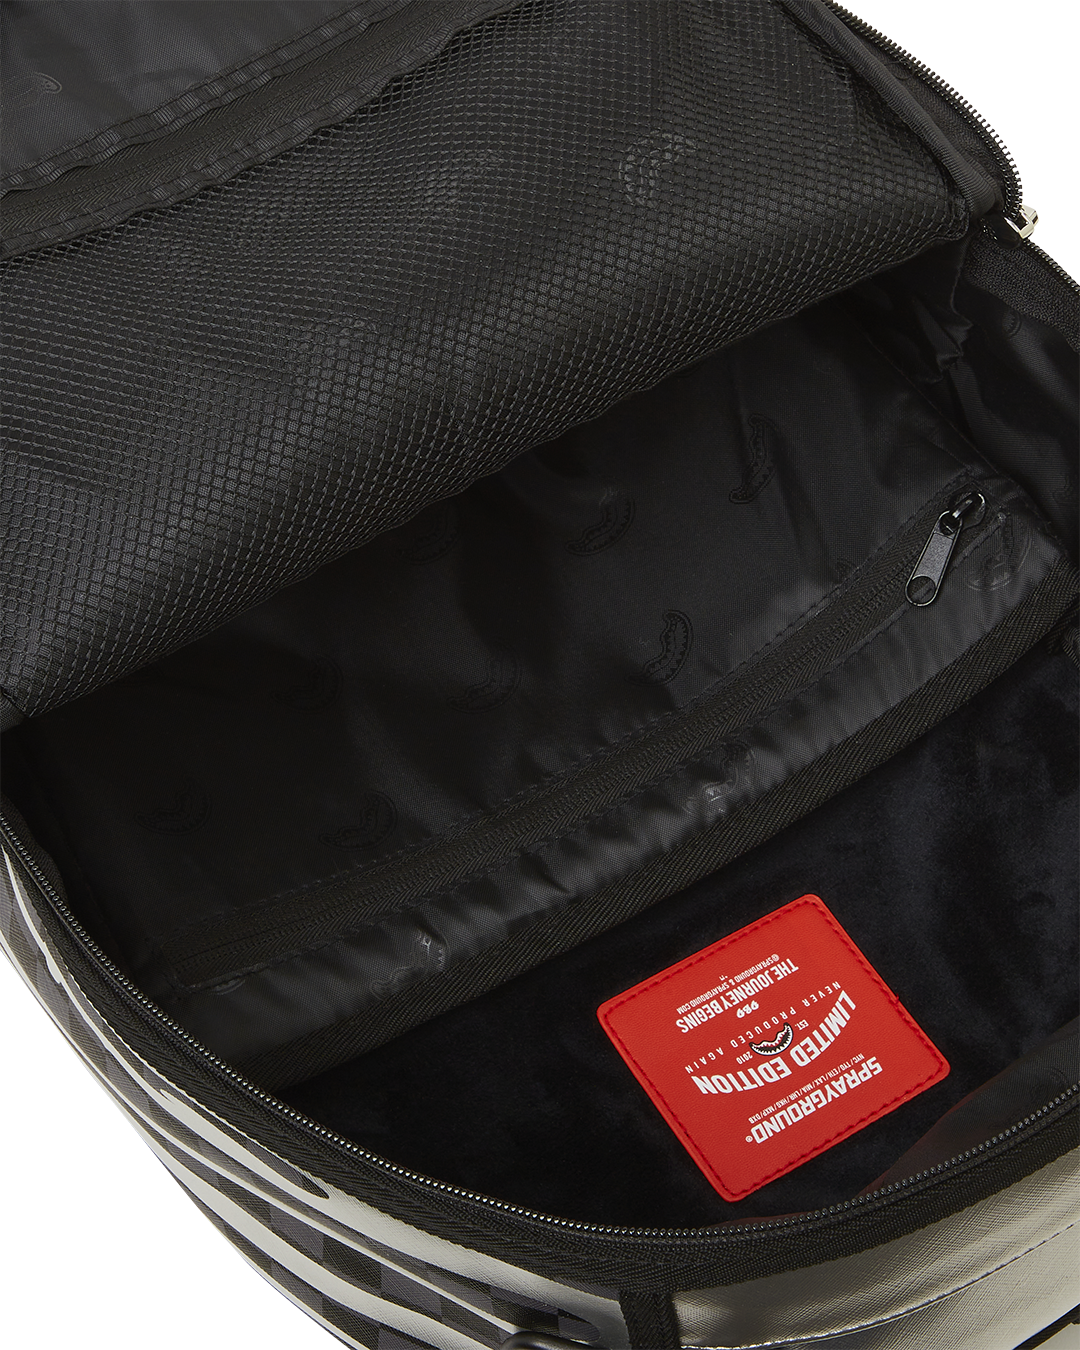 SPRAYGROUND Getaway Backpack (DLXV) - Sprayground Backpack